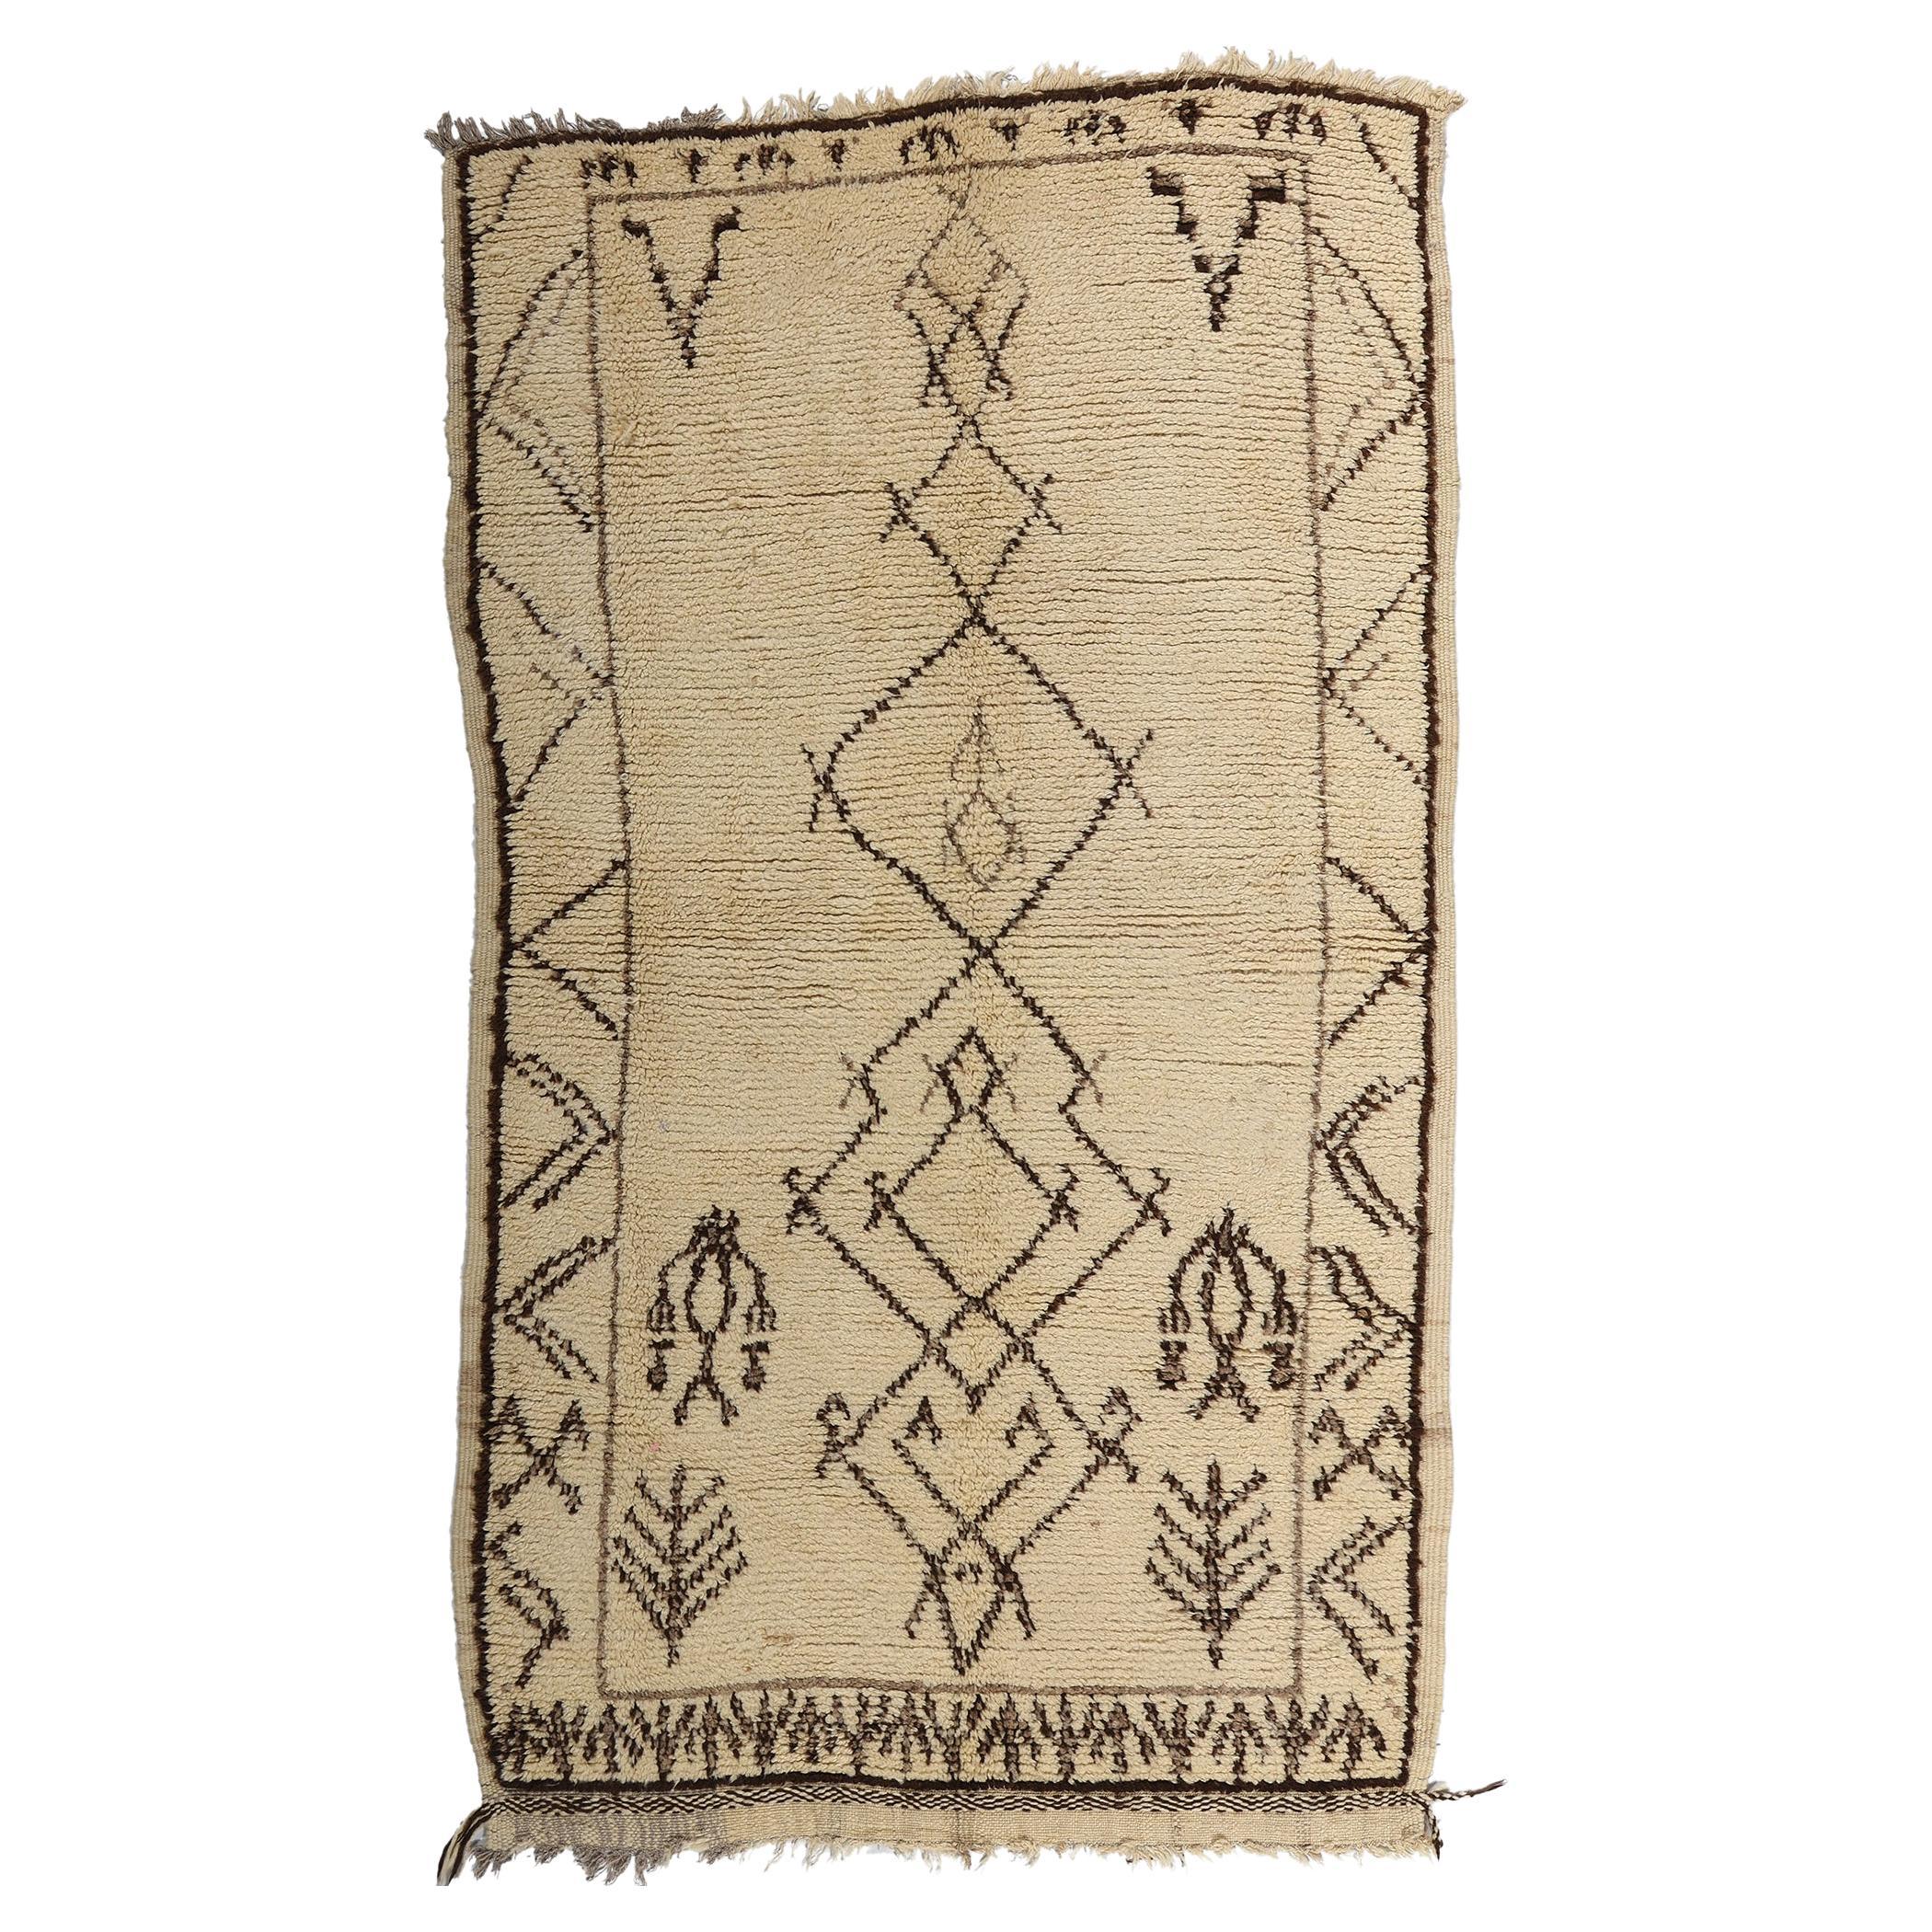 Vintage Neutral Moroccan Azilal Rug, Tribal Enchantment Meets Shibui Design